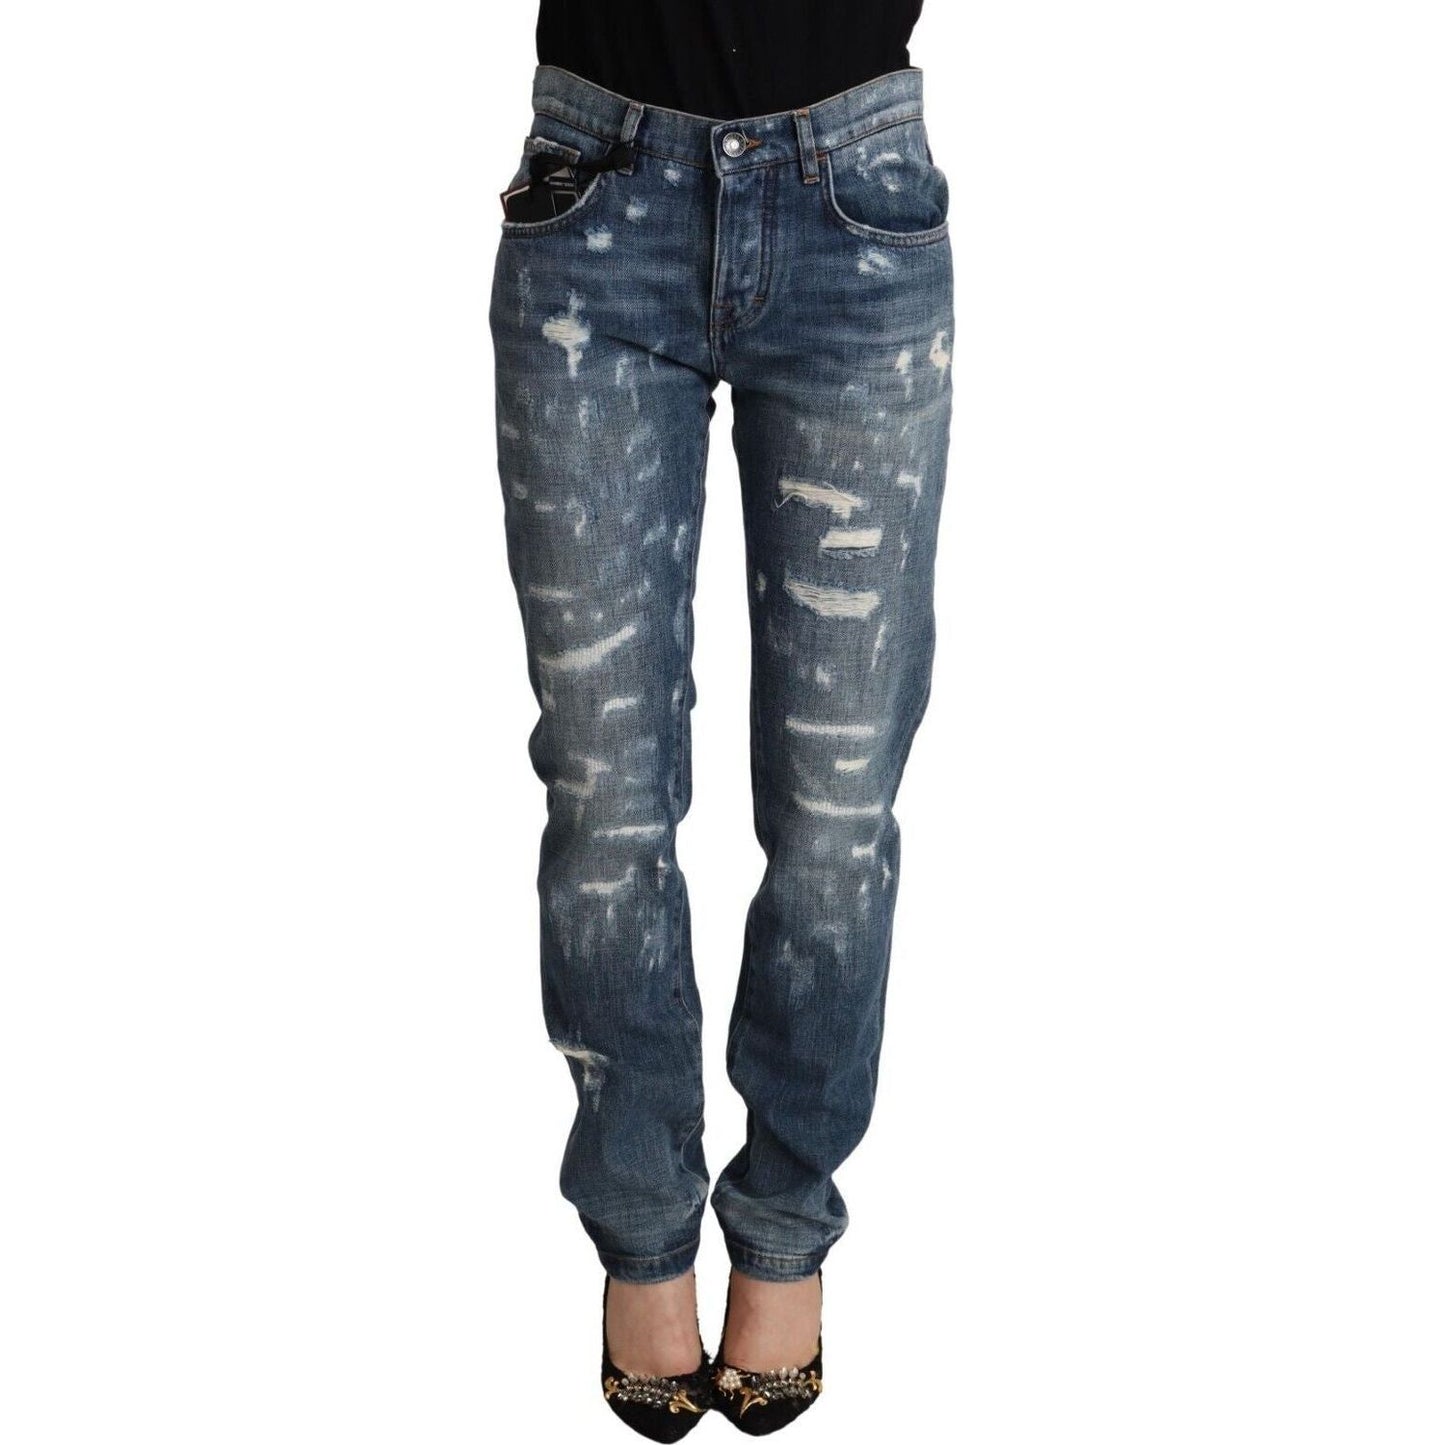 Dolce & Gabbana Elegant Skinny Denim Jeans for the Modern Woman blue-distressed-denim-boyfriend-skinny-jeans